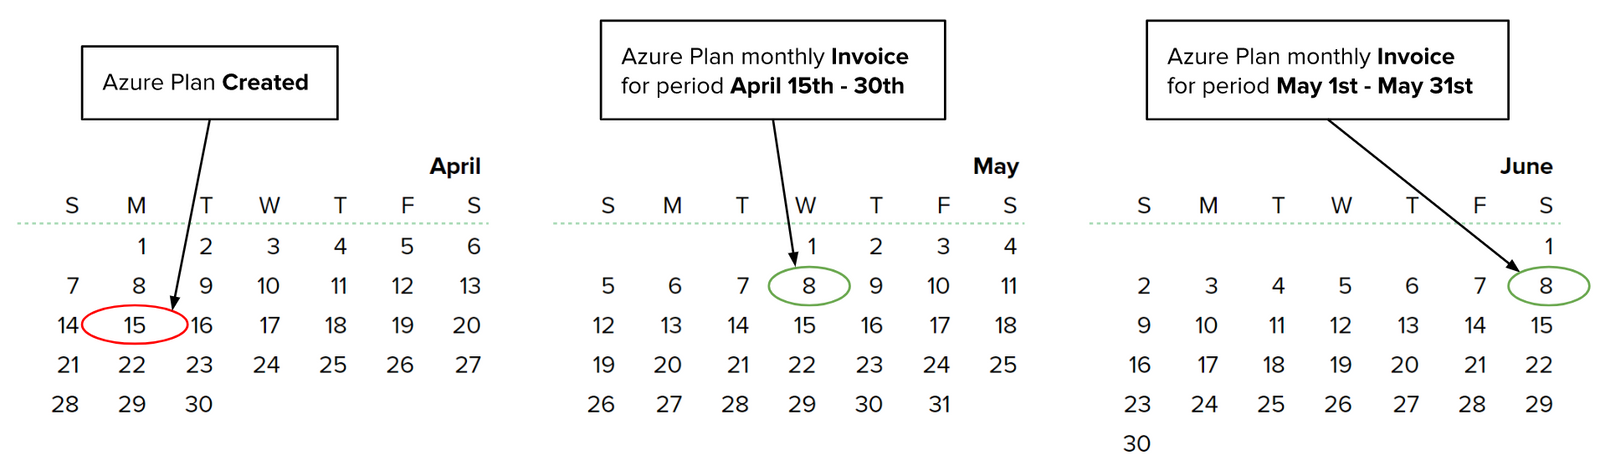 Azure Plan Billing Periods